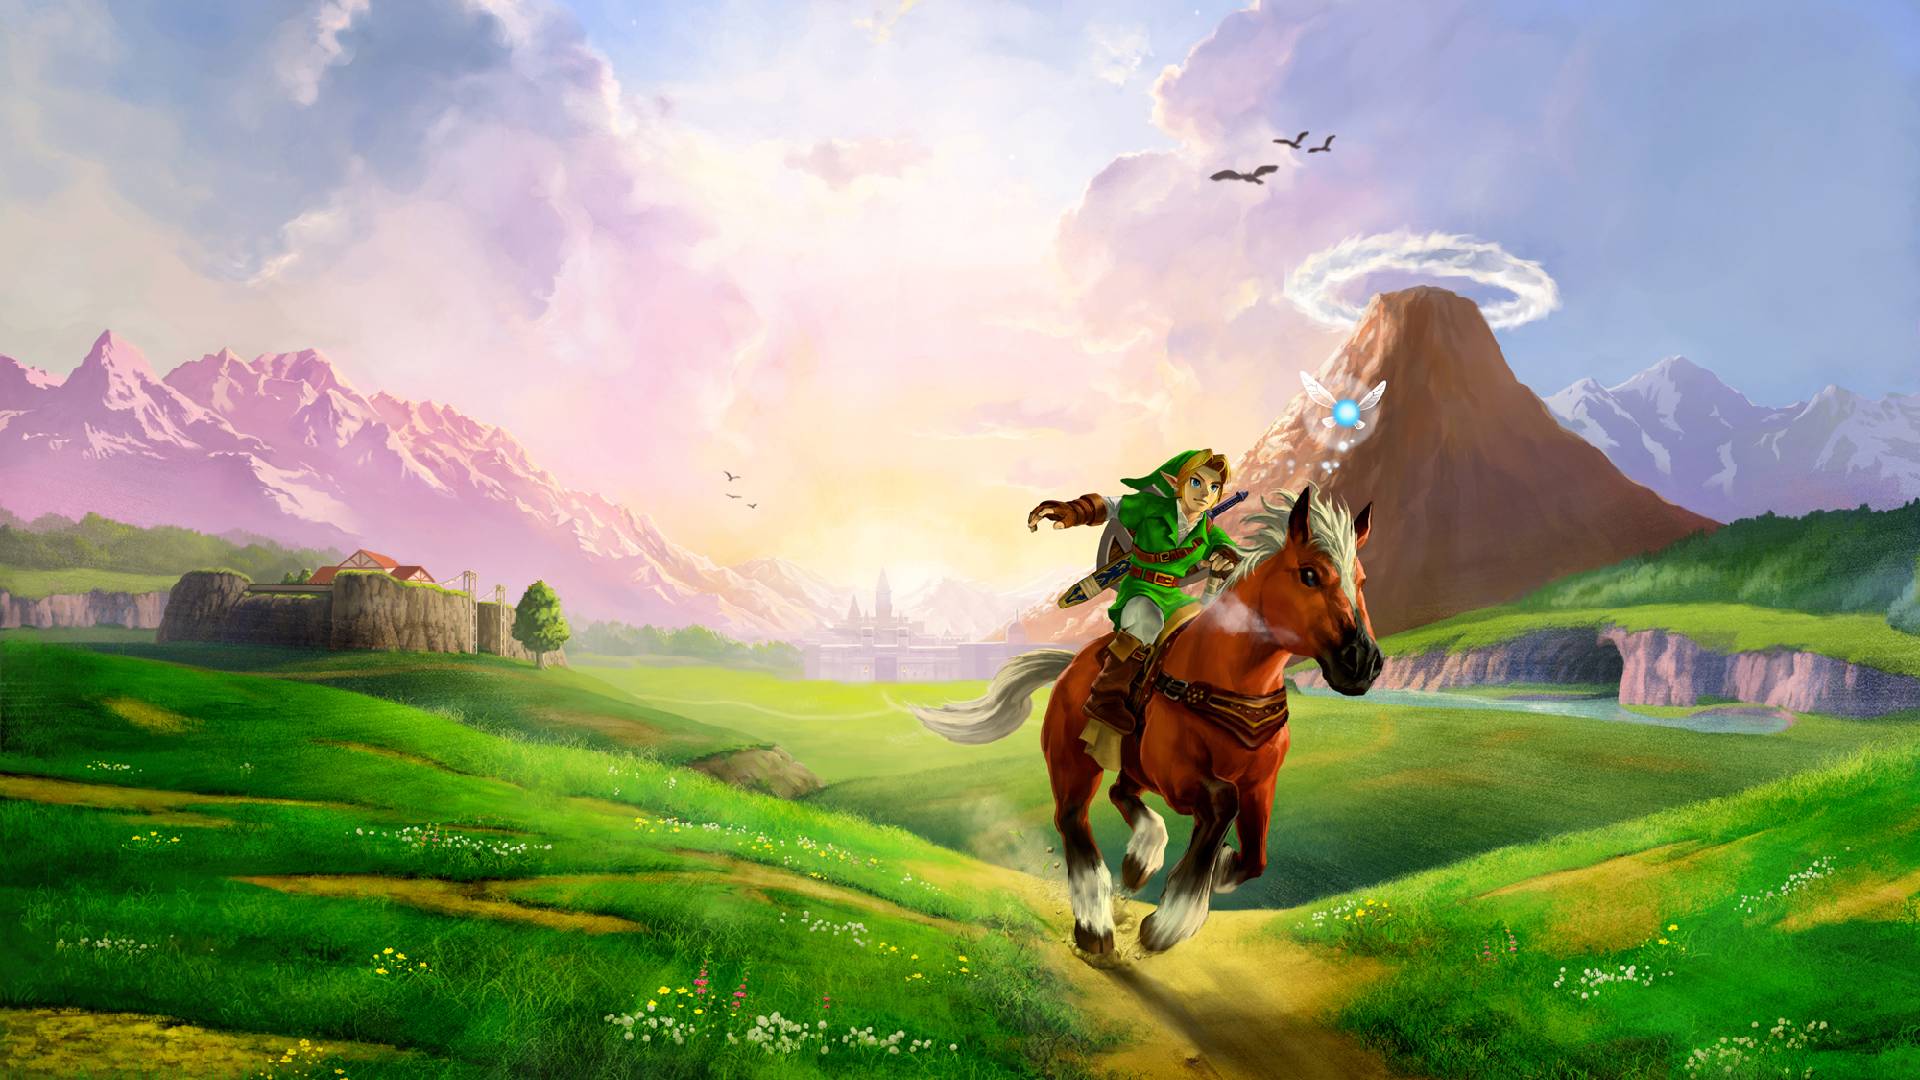 The Legend of Zelda: Ocarina of Time, Nintendo